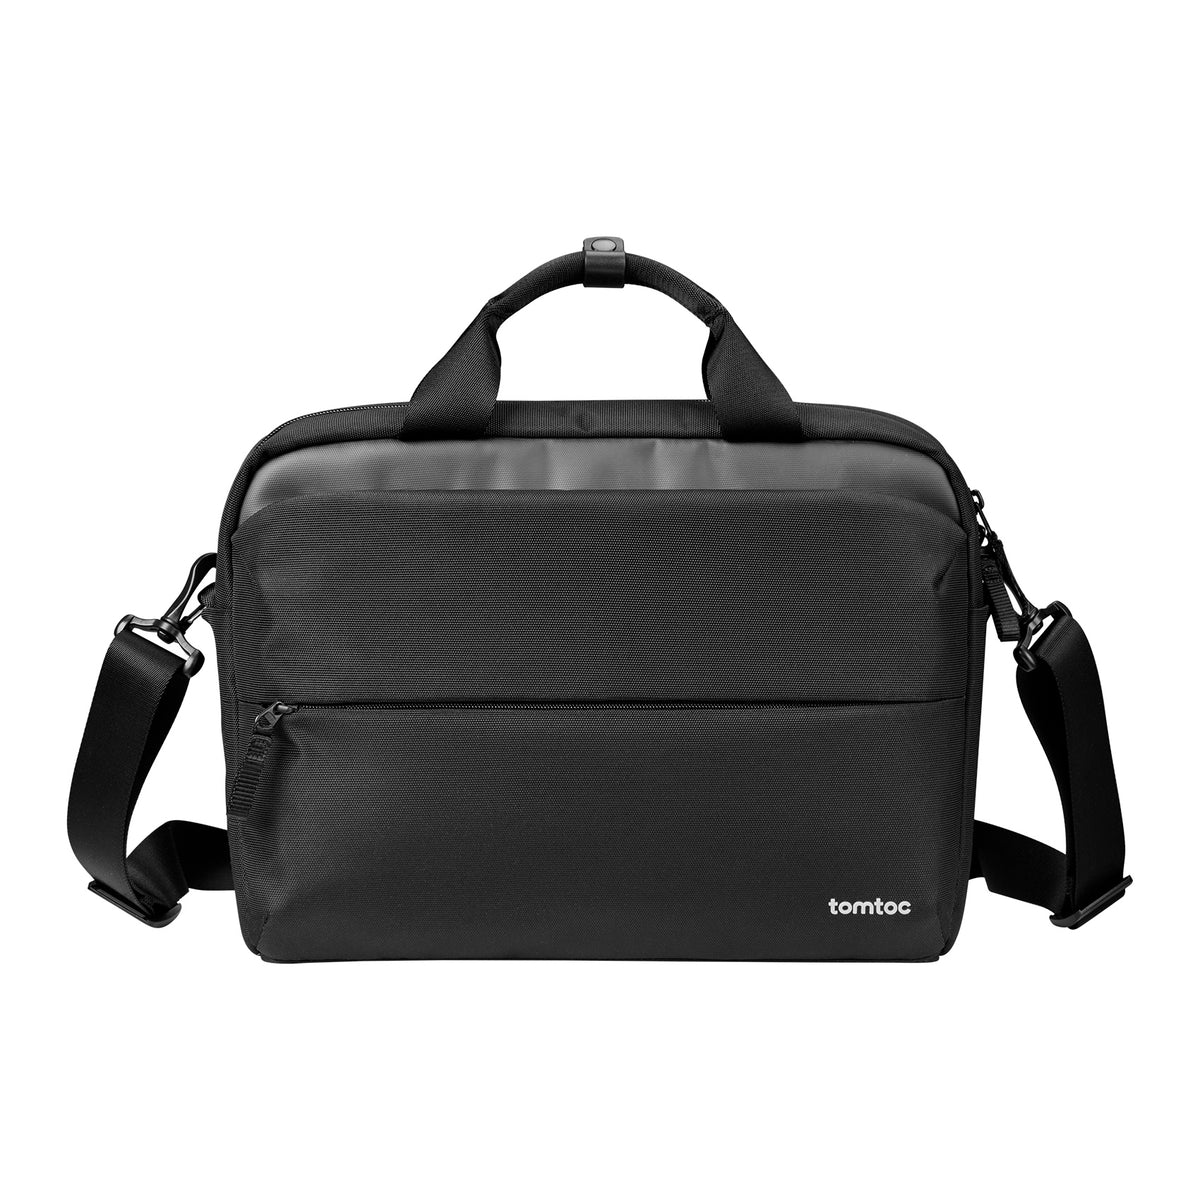 tomtoc 14 Inch Navigator Business Laptop Briefcase - Black